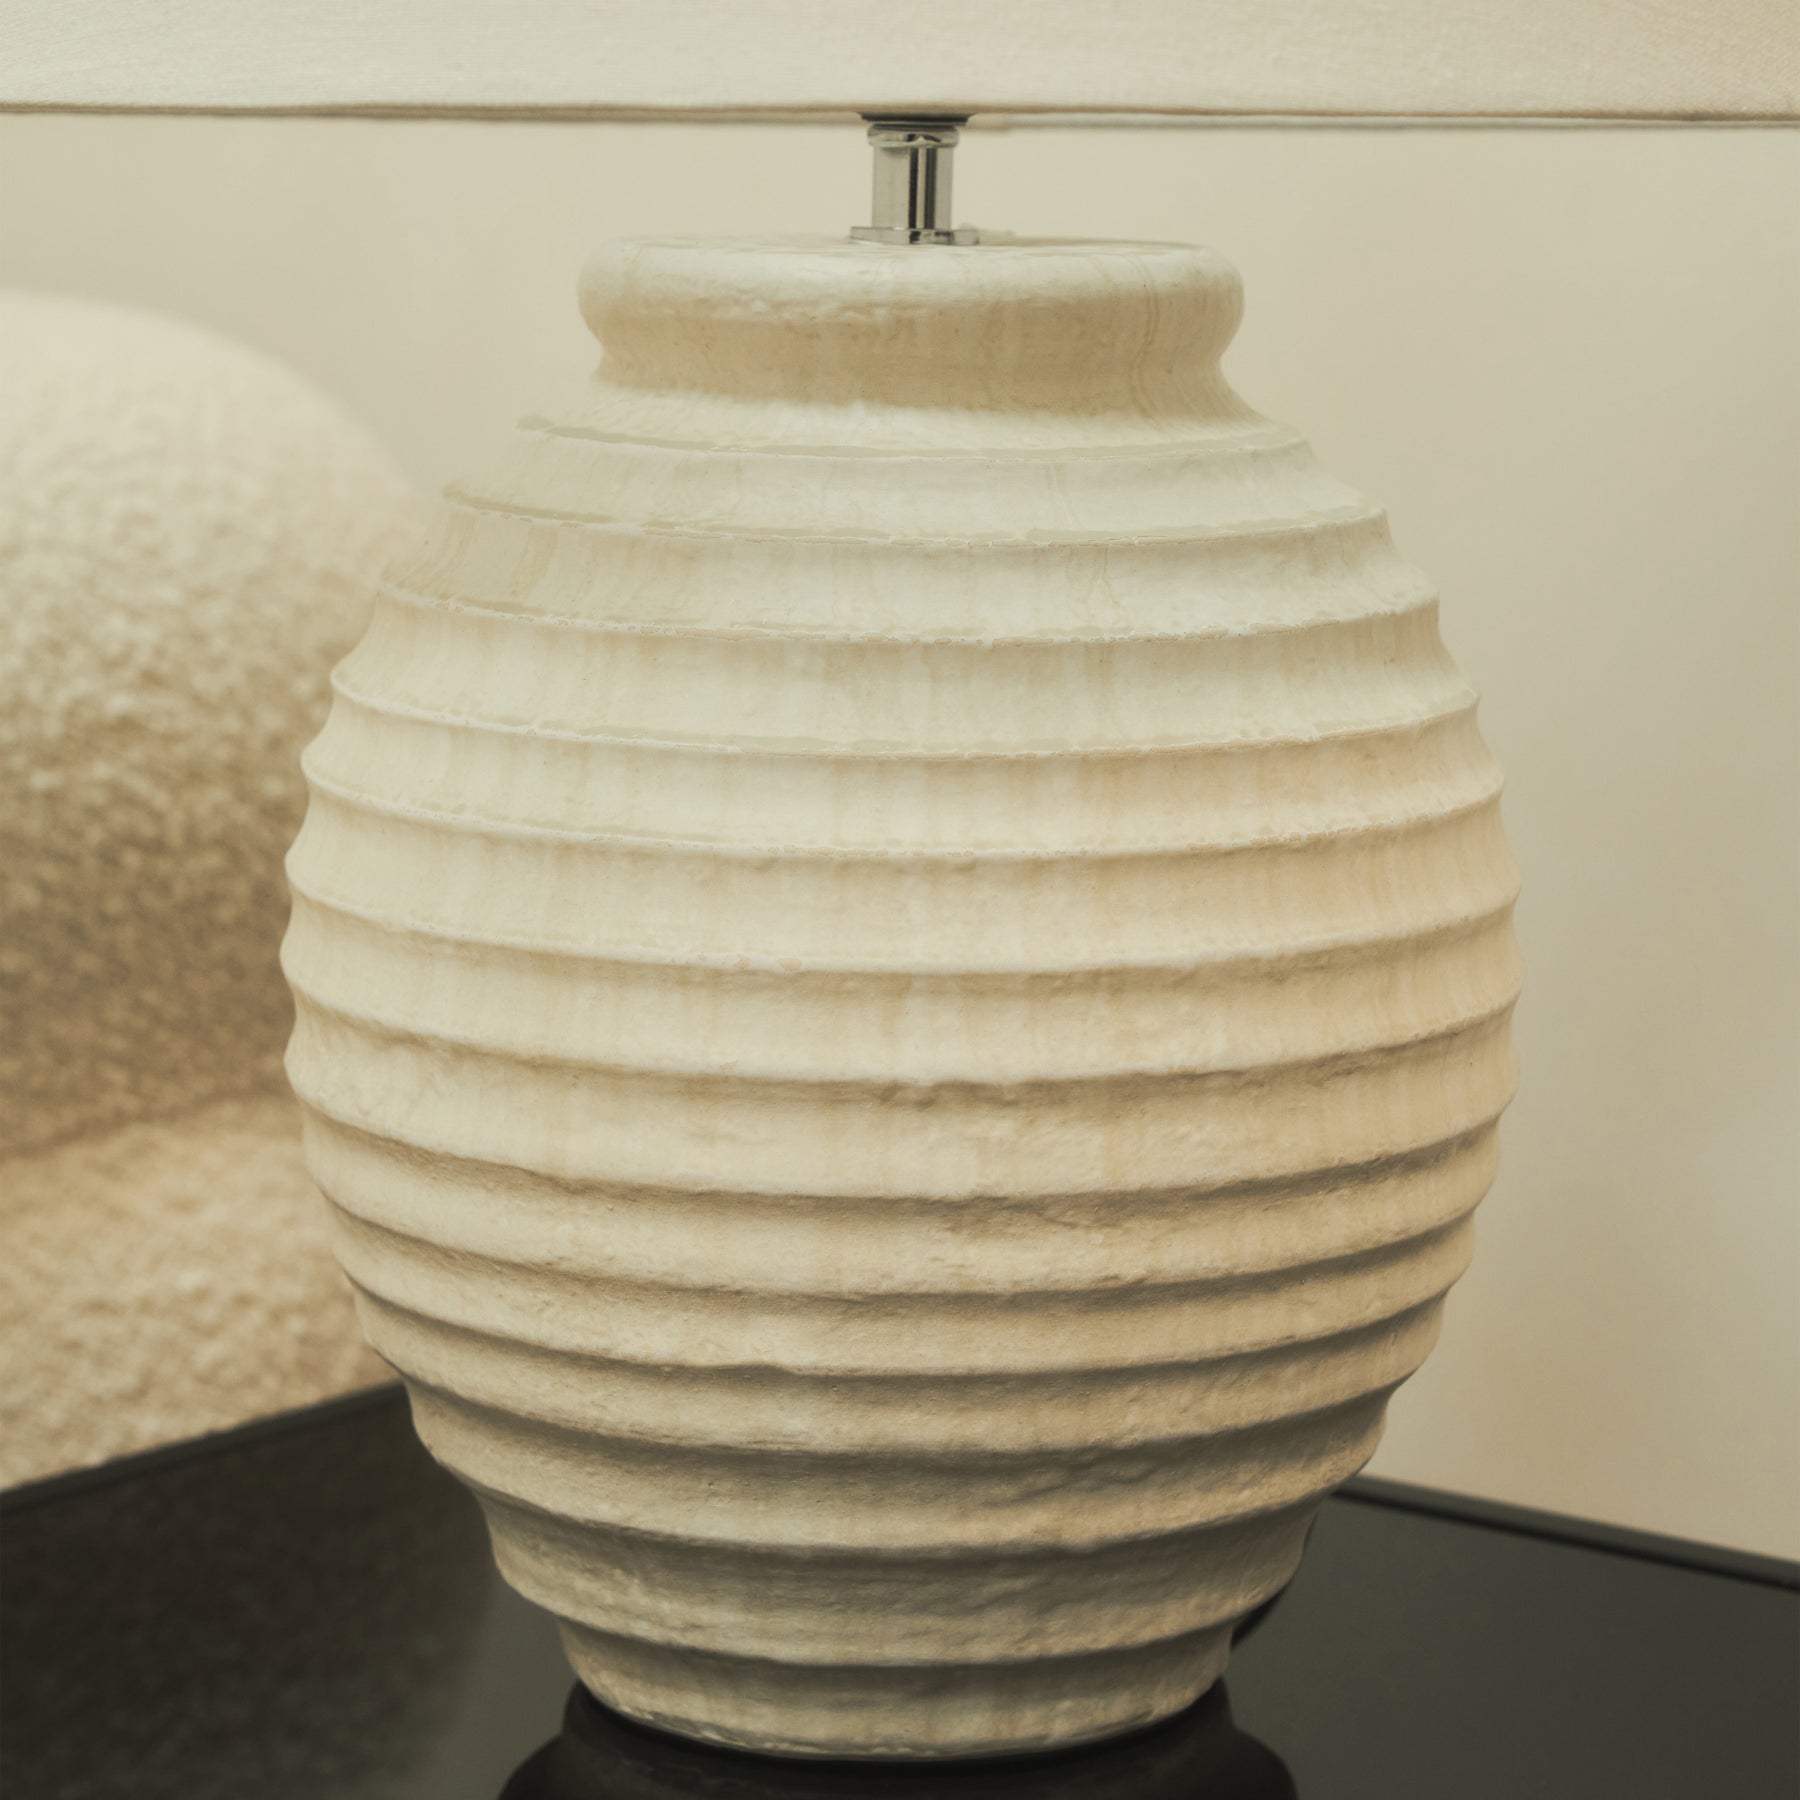 Textured Ceramic Based Table Lamp Natural Shade detail shot of textured ceramic